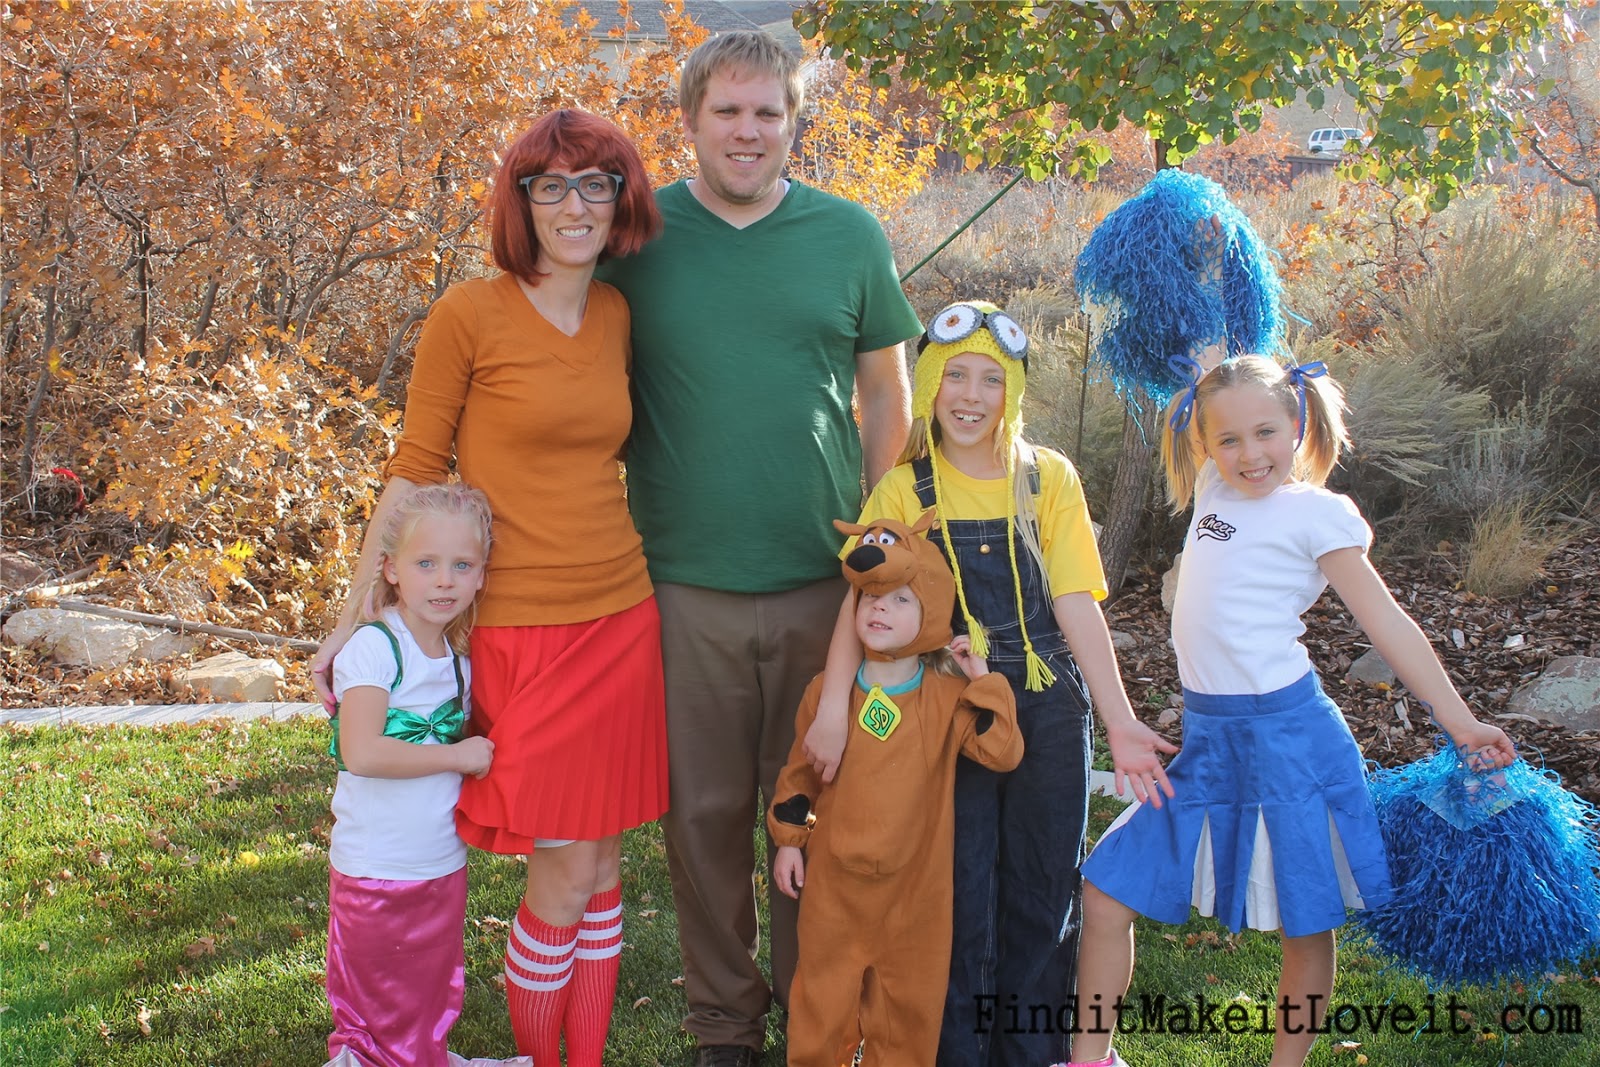 DIY Costumes-Minion, Bride of Frankenstein, Scooby doo gang - Find it, Make it, Love it